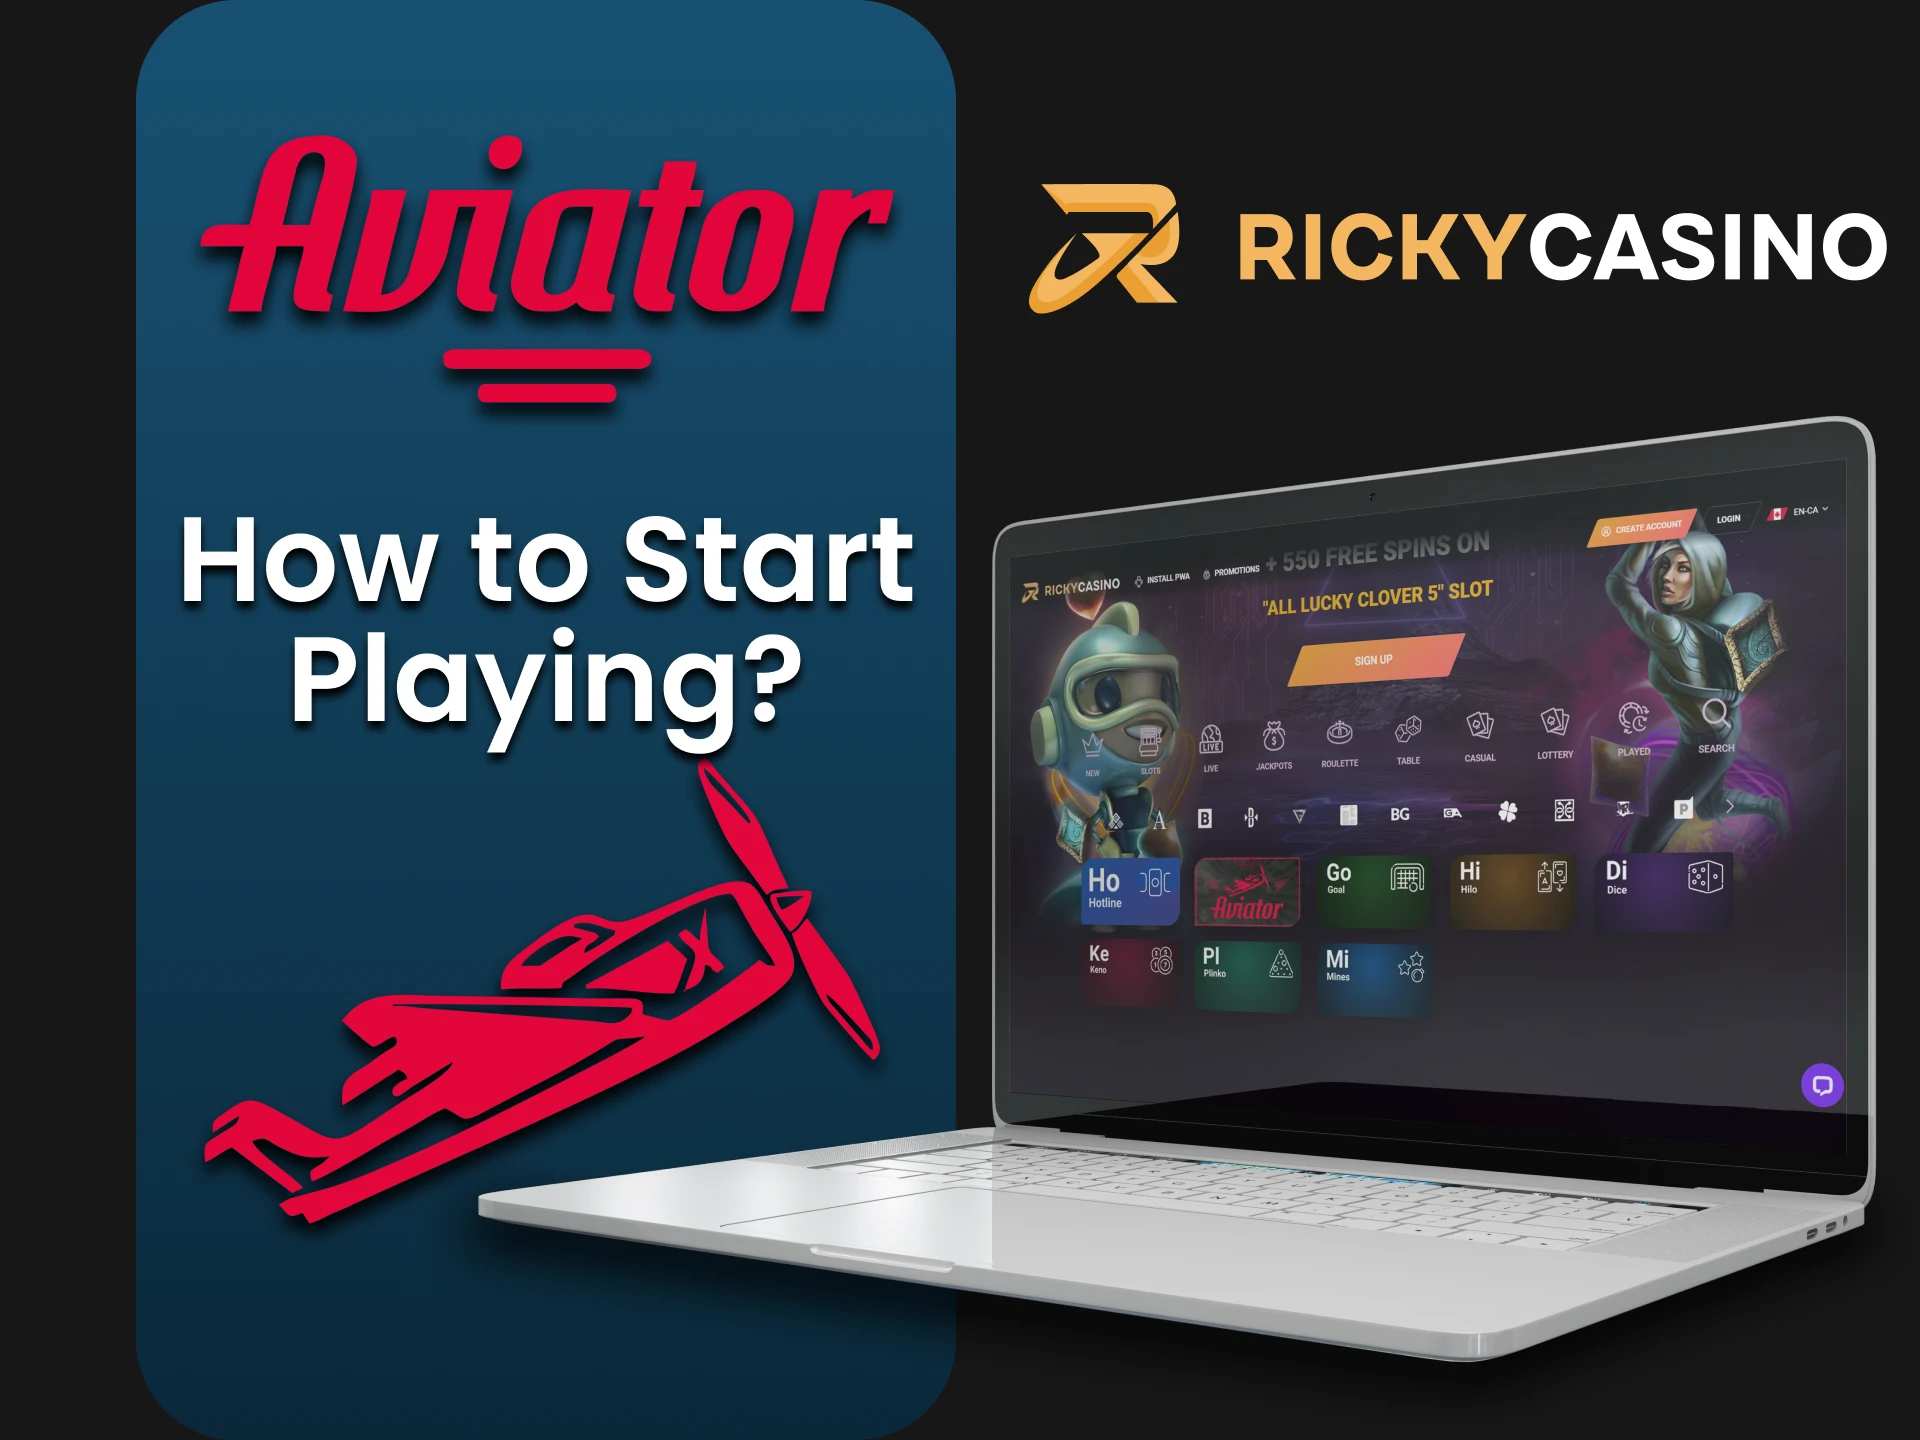 Head over to Ricky Casino to play Aviator.